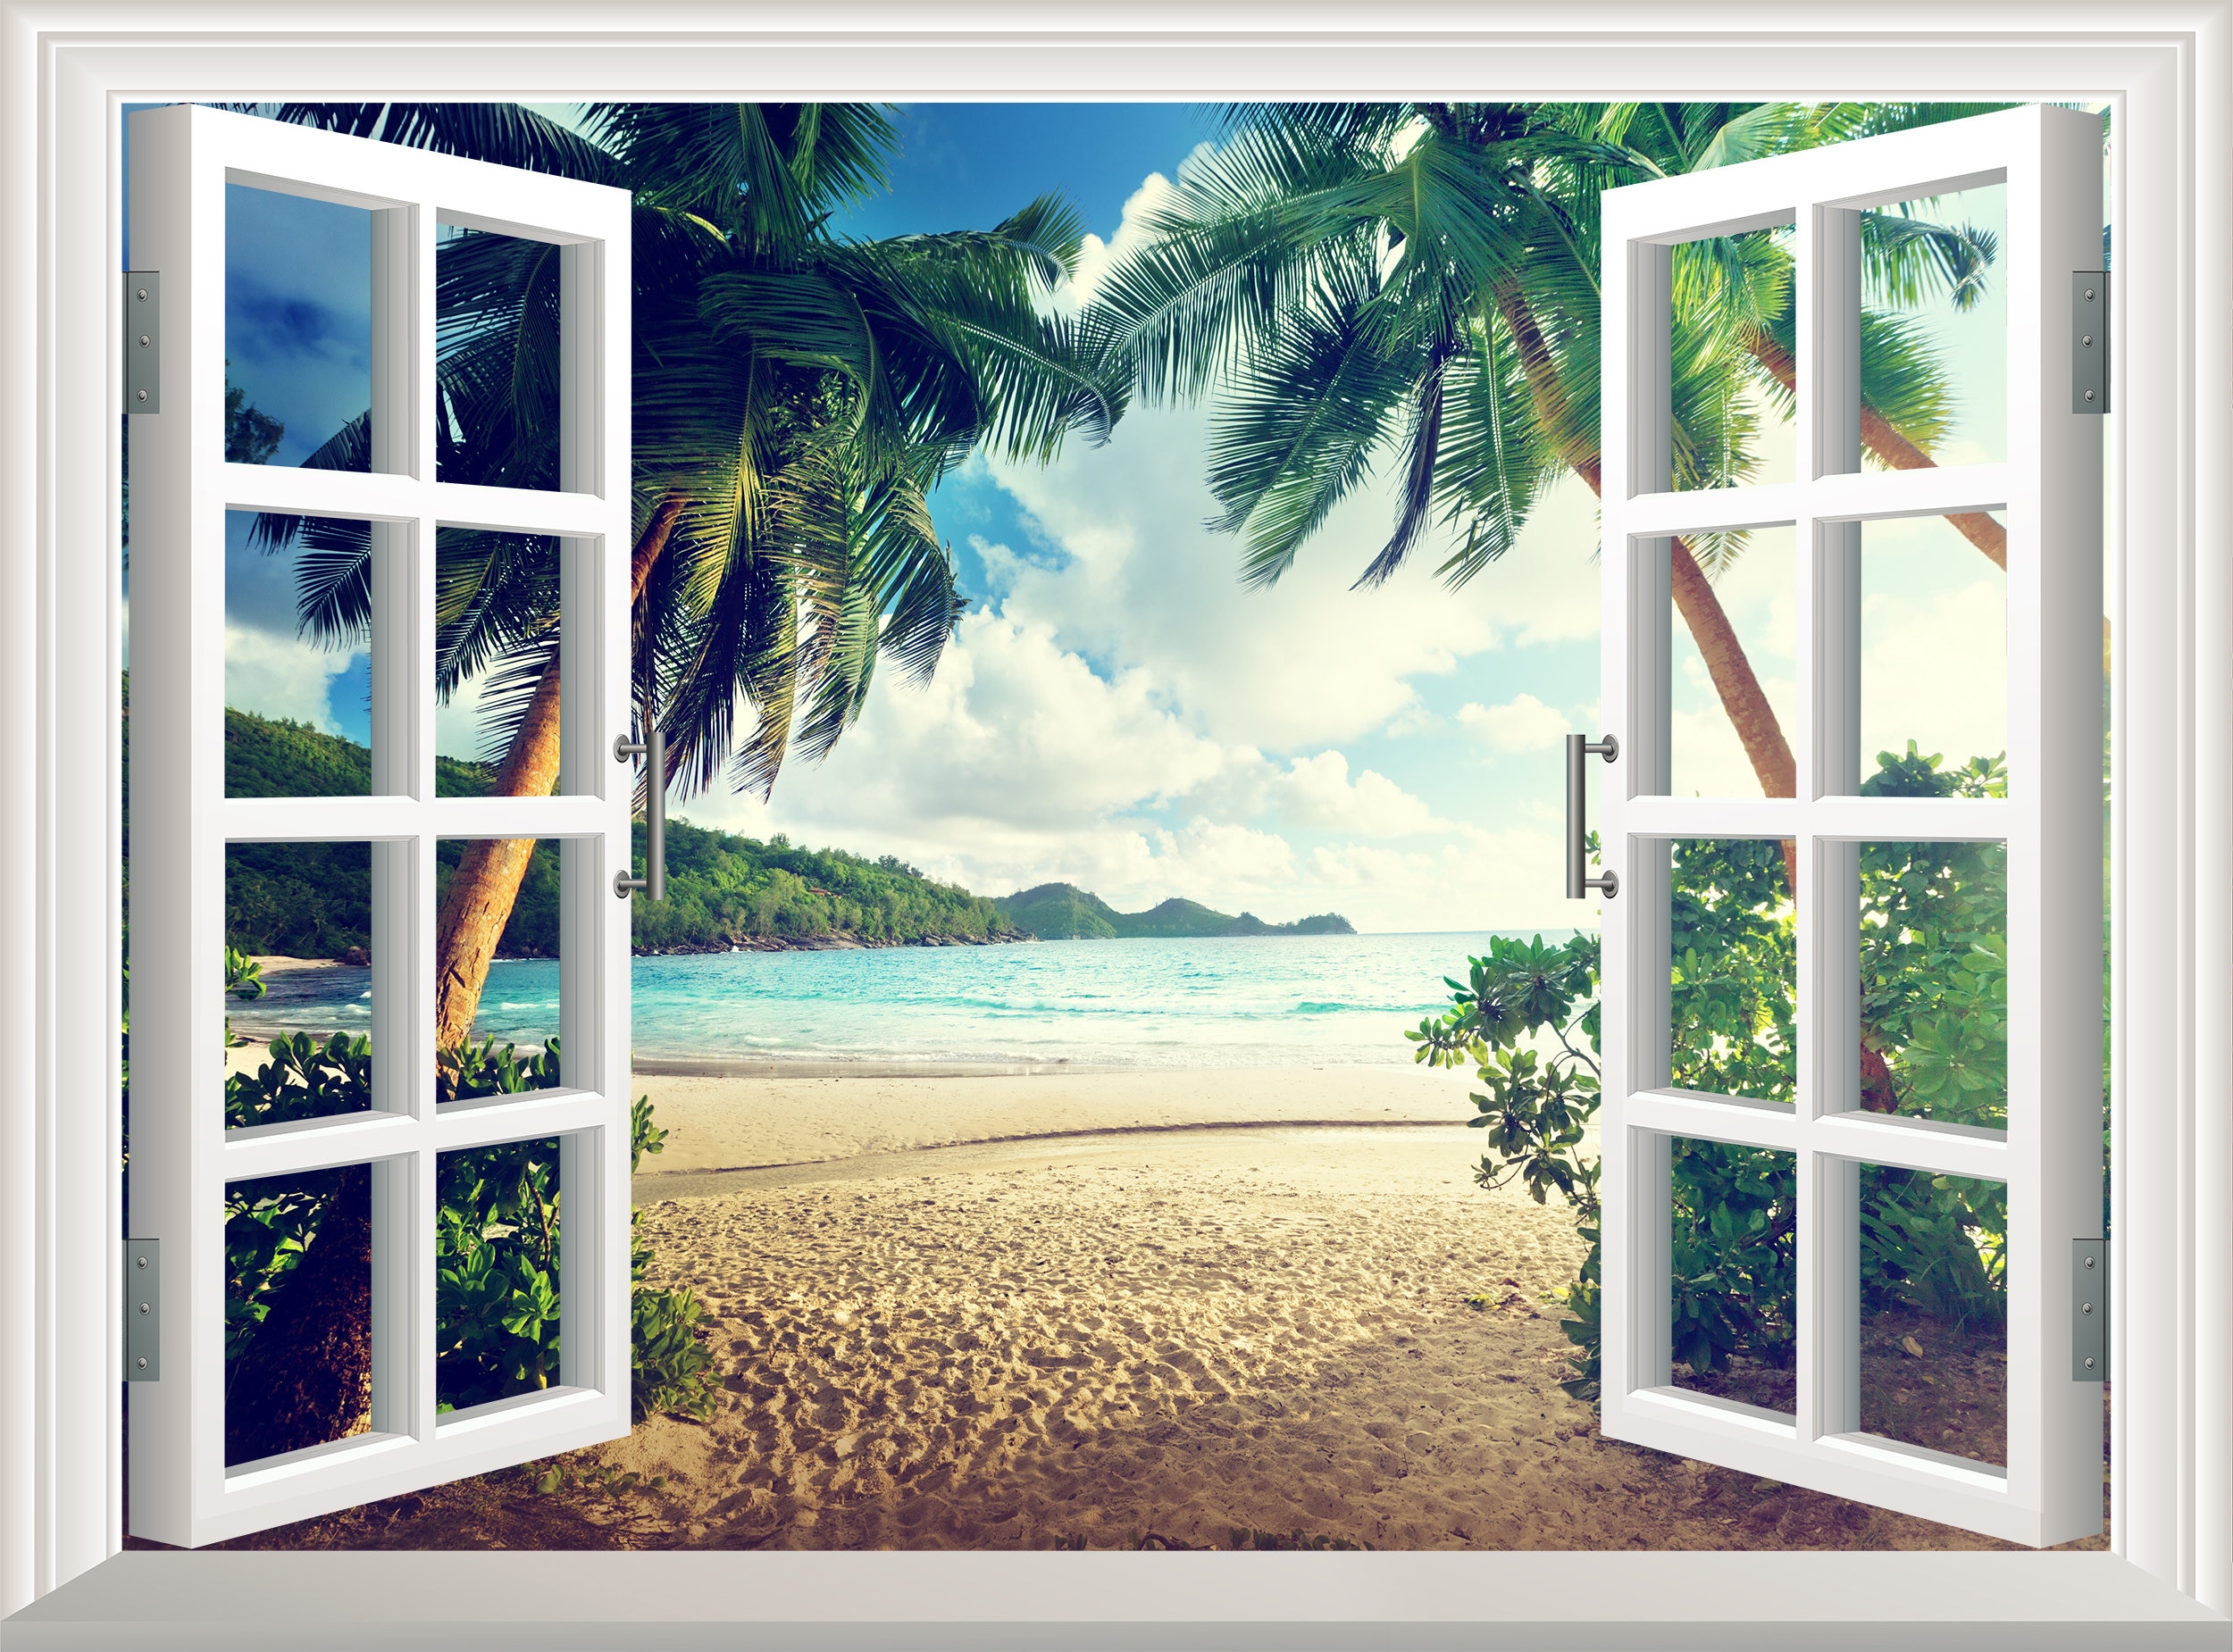 3D Ocean Nature Sea View Mural Window Home Decor Sticker Room picture poster art TOOGOO R 